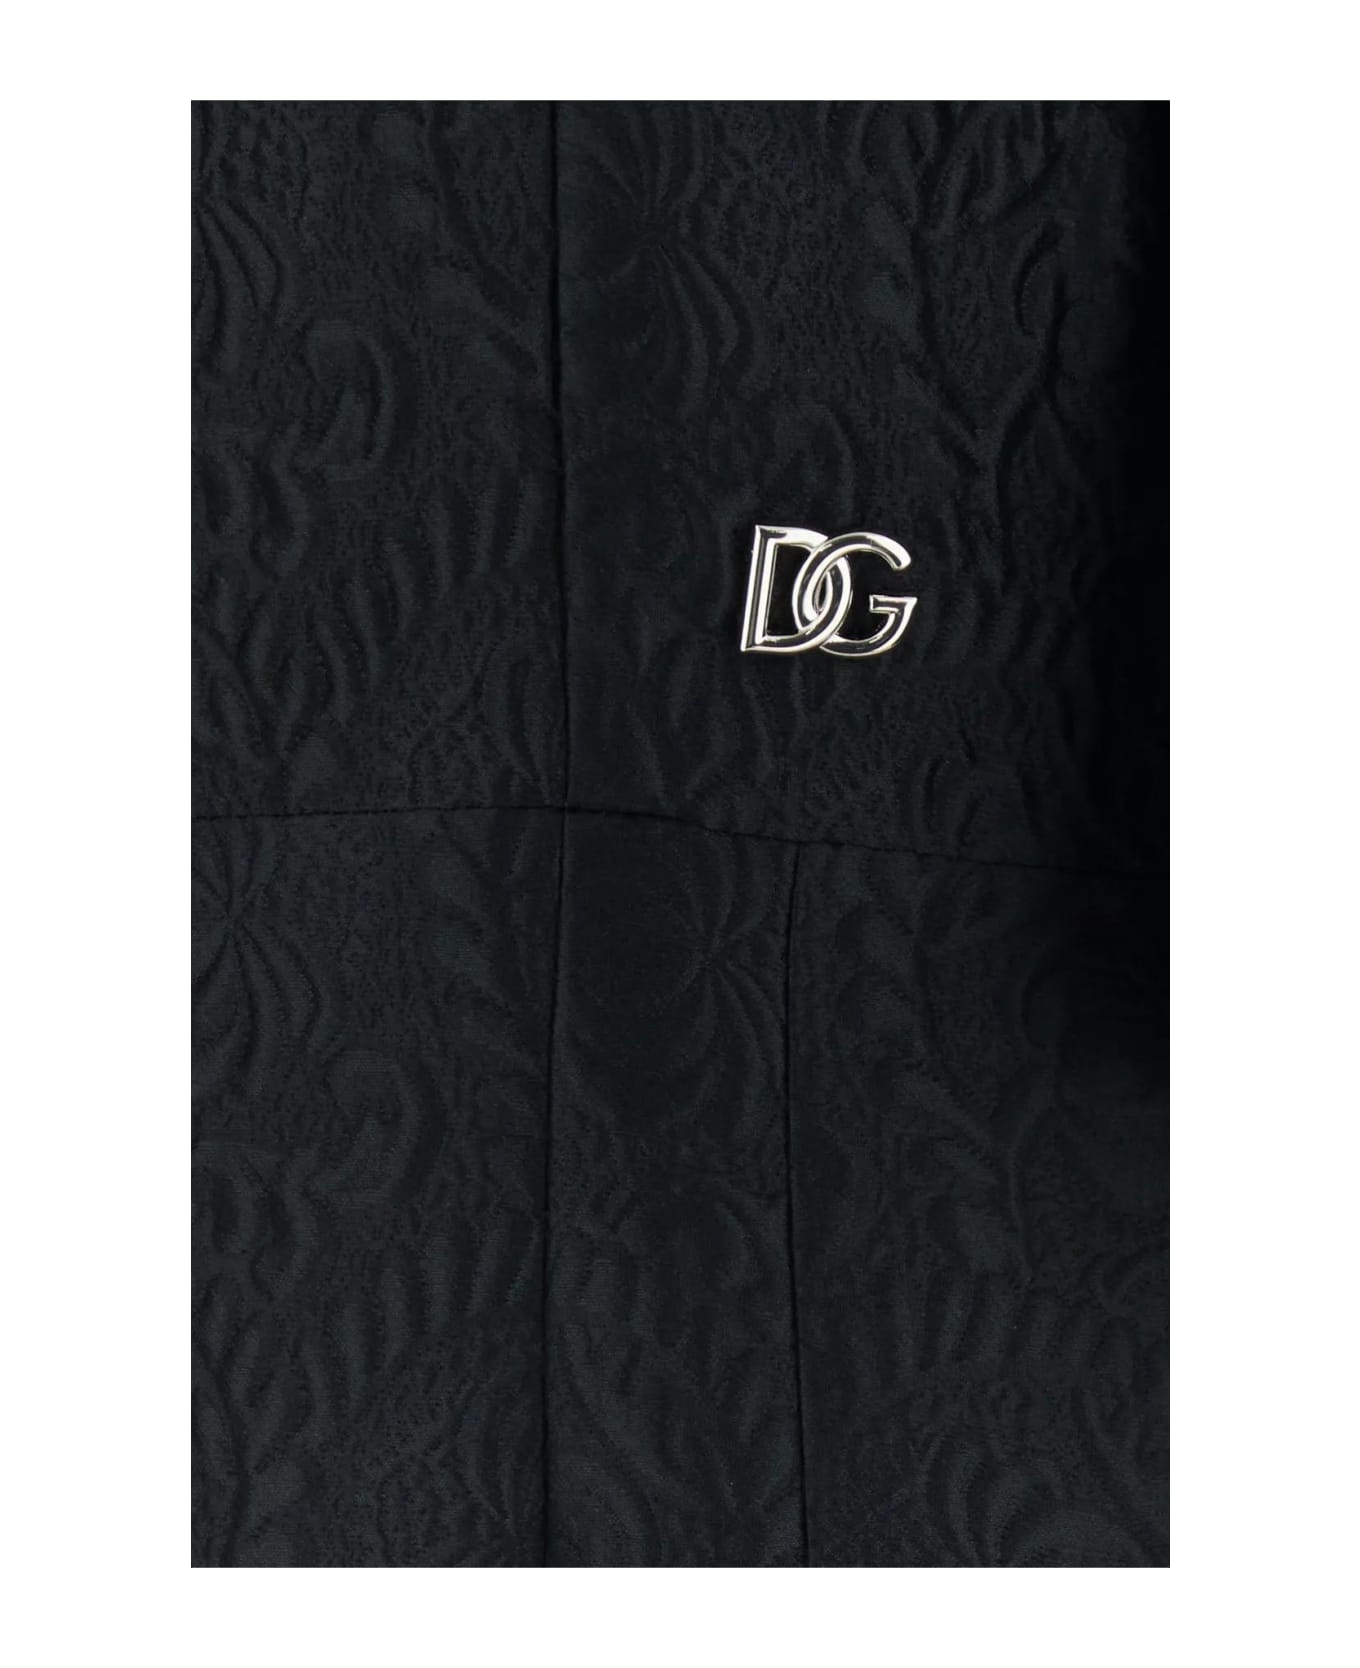 Dolce & Gabbana Black Jacquard Dress - Nero